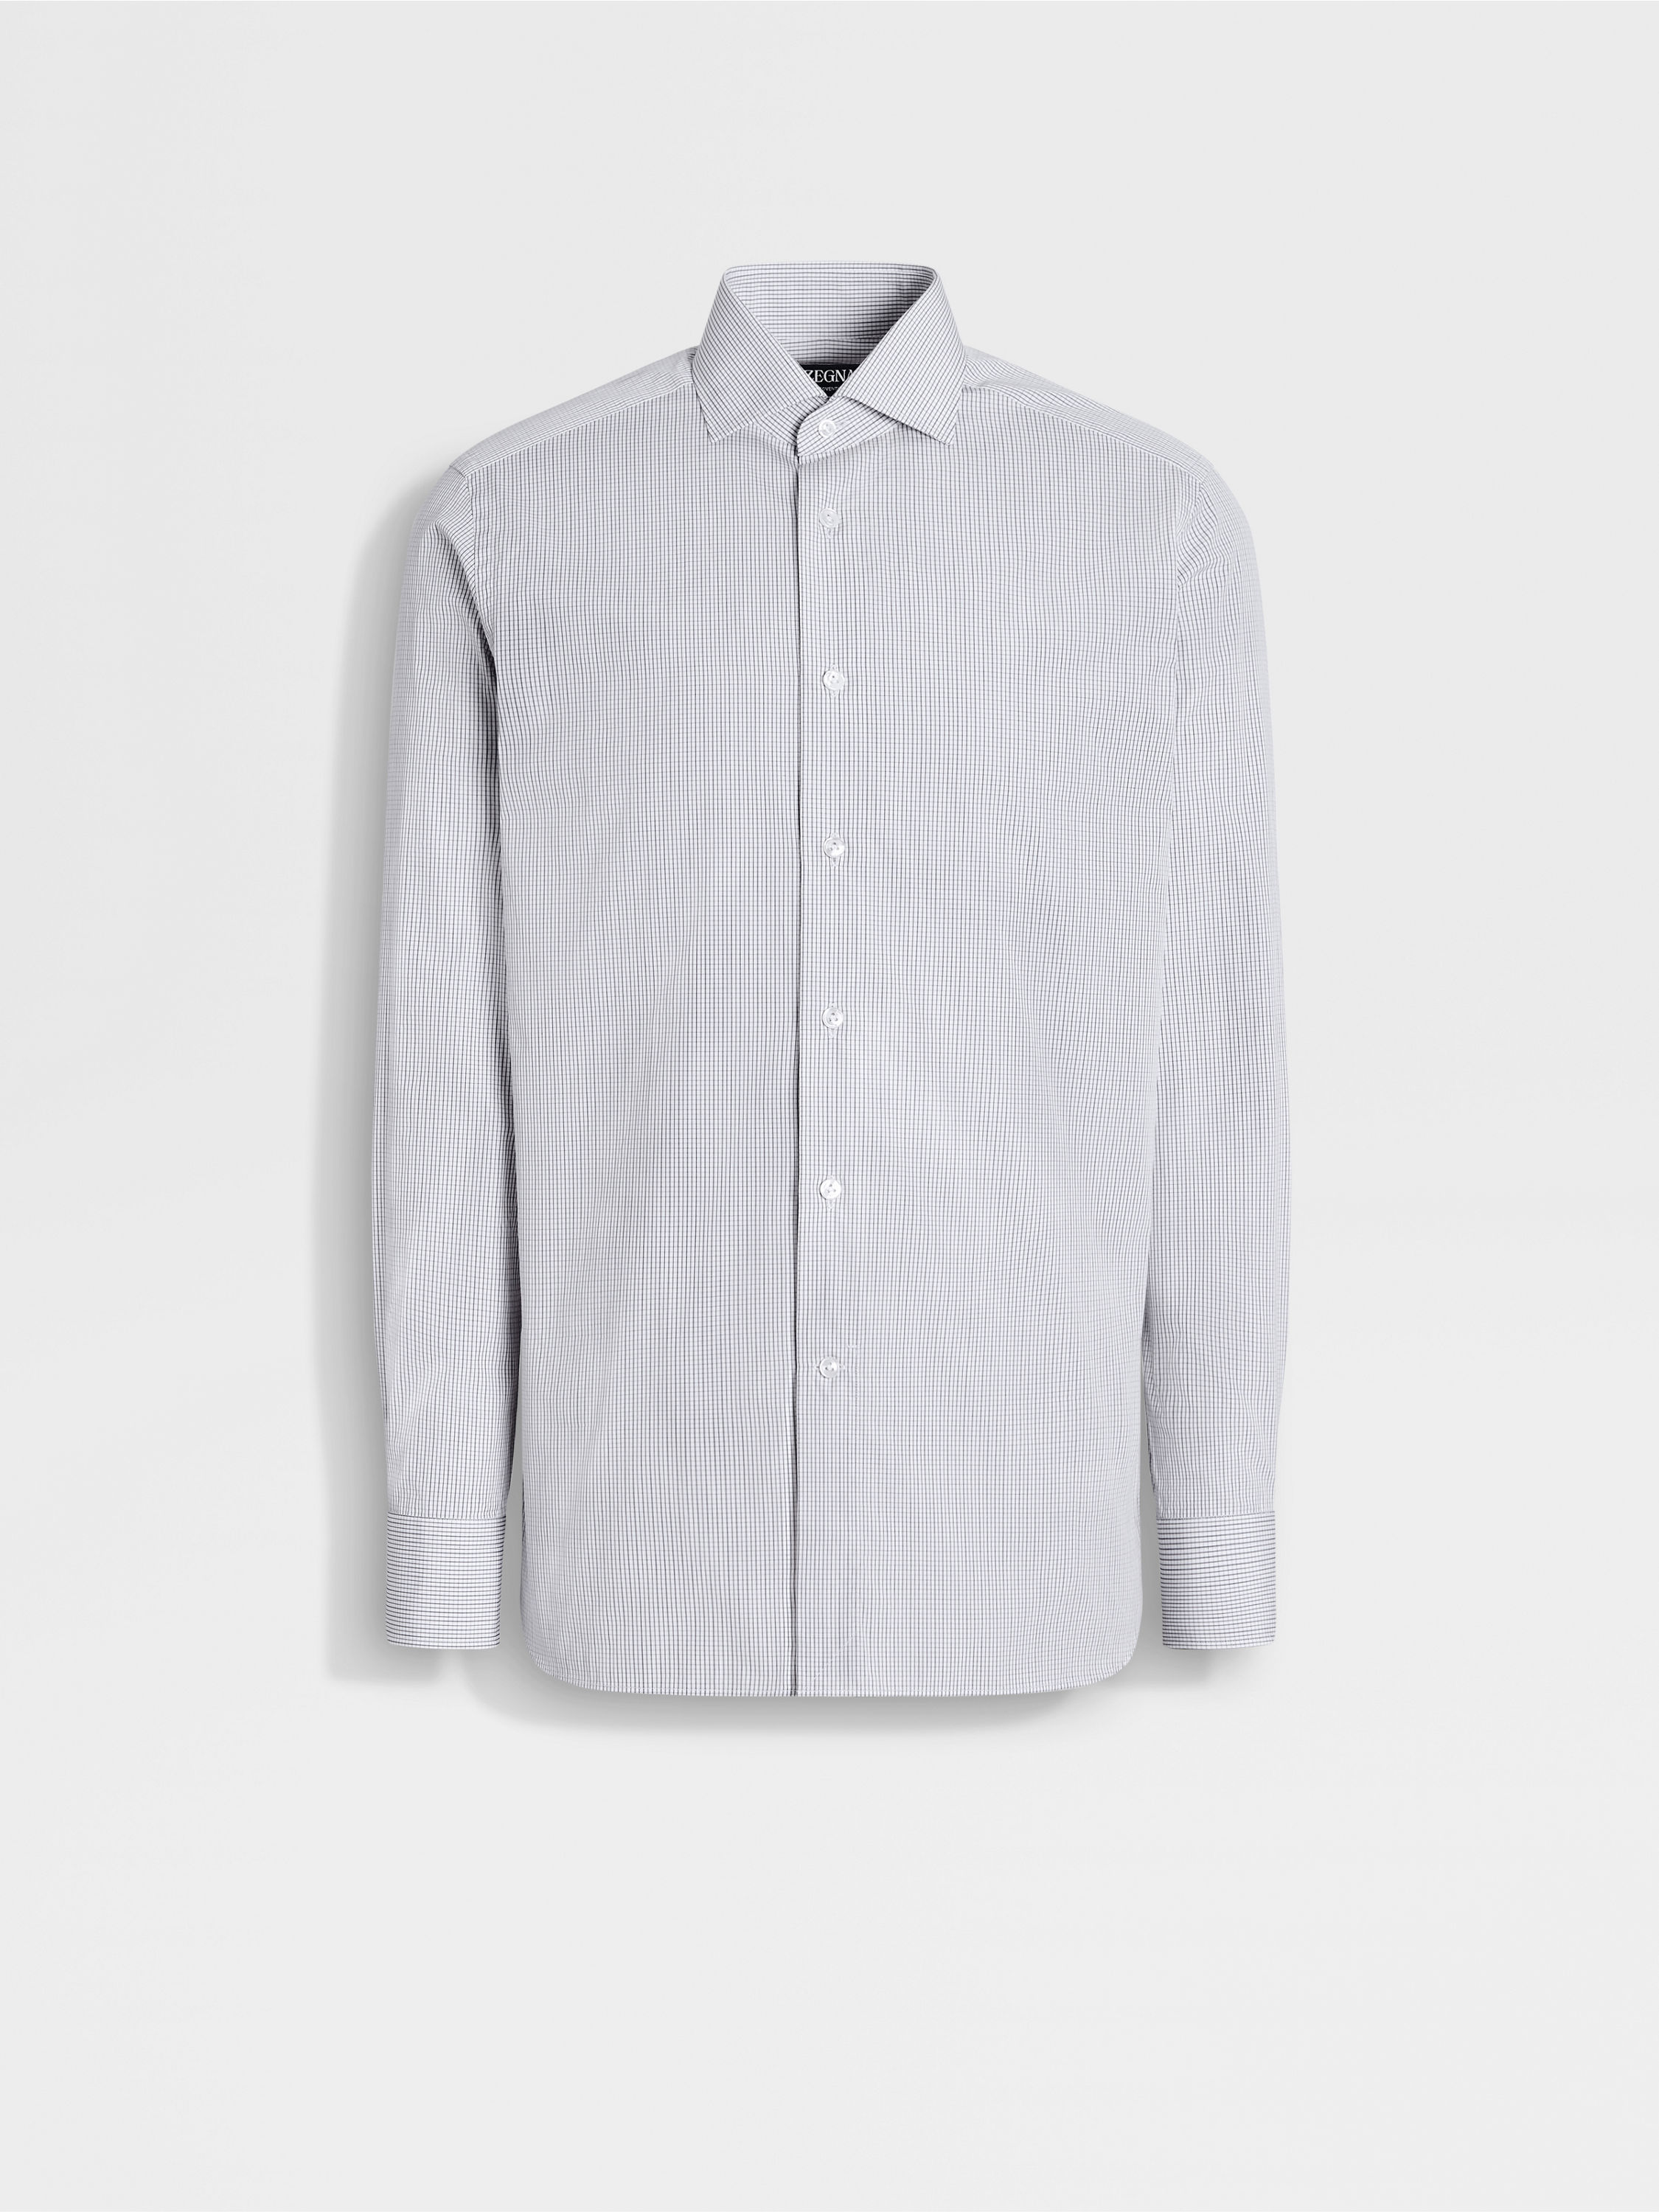 Zegna,male,Dark Grey and White Micro-checked Centoventimila Cotton Shirt,Dark Grey/White,44